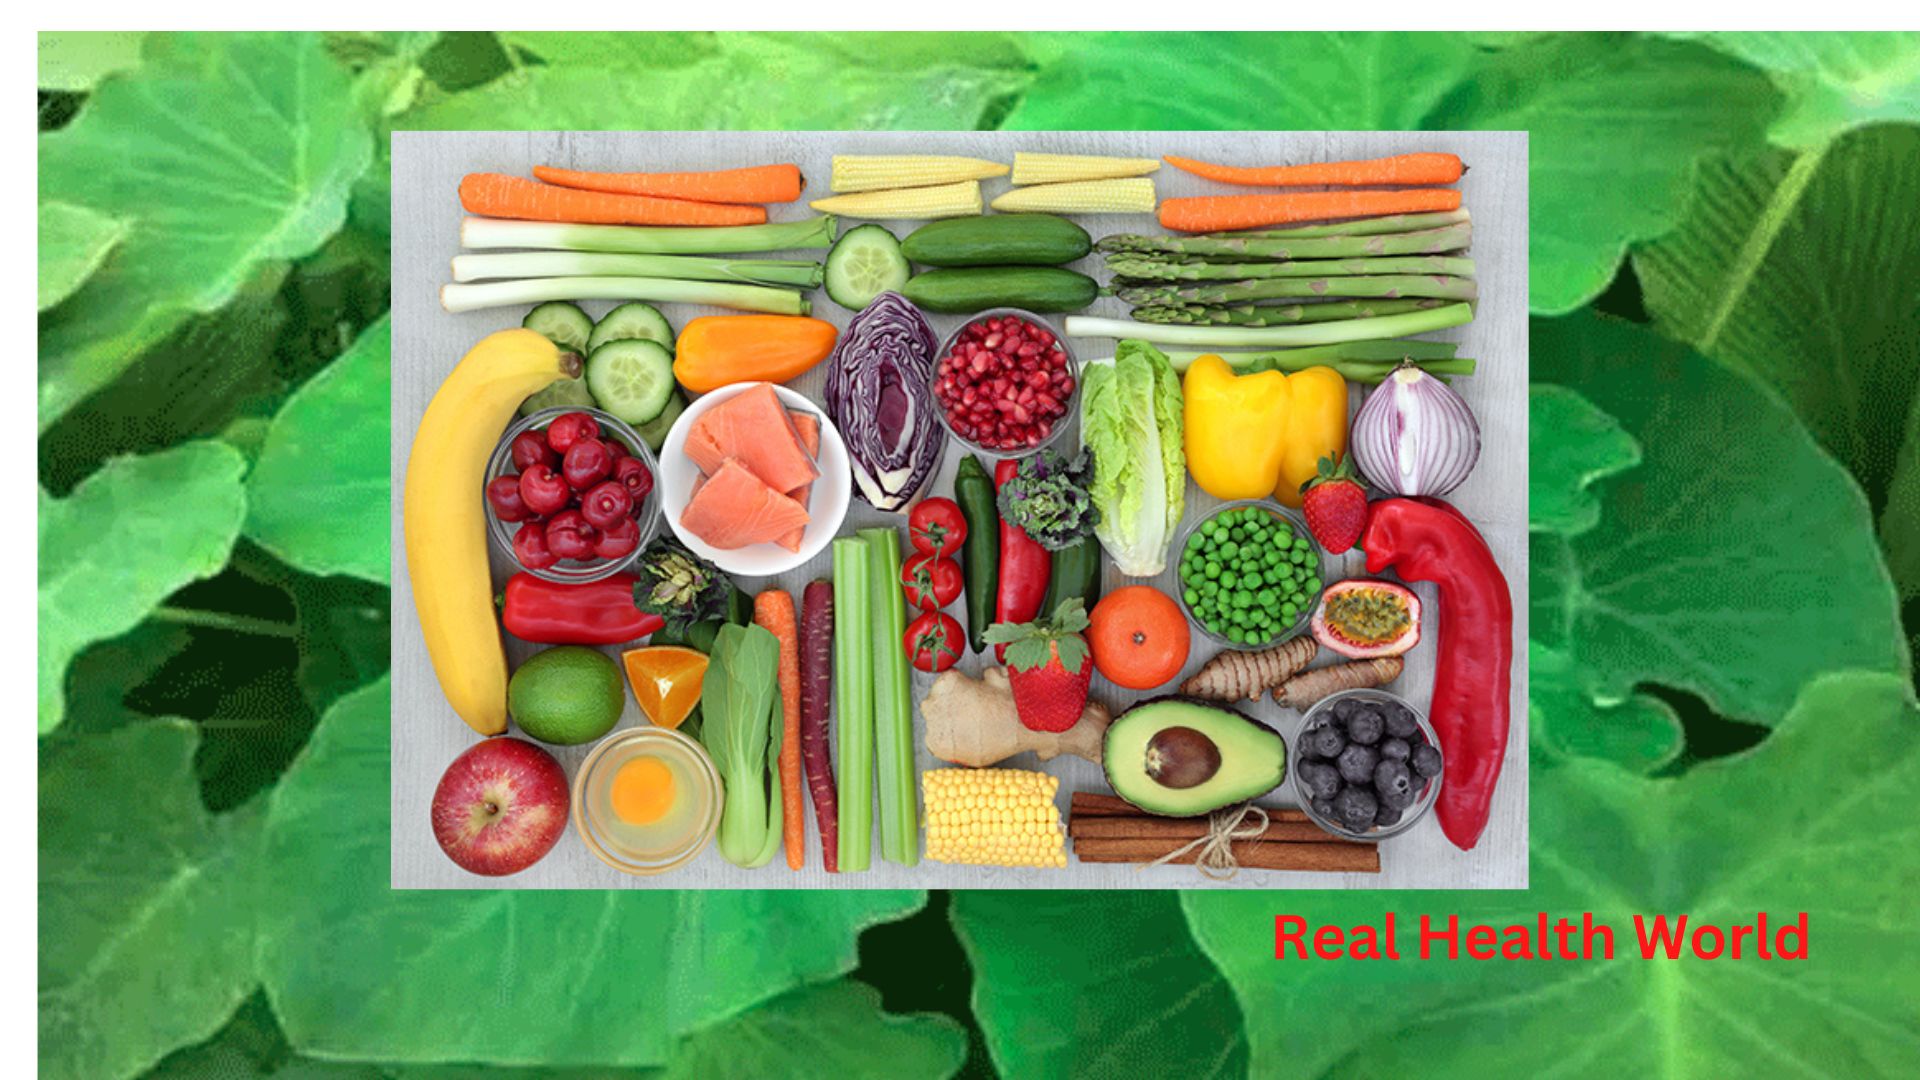 Raw vegetables reduce digestive problems